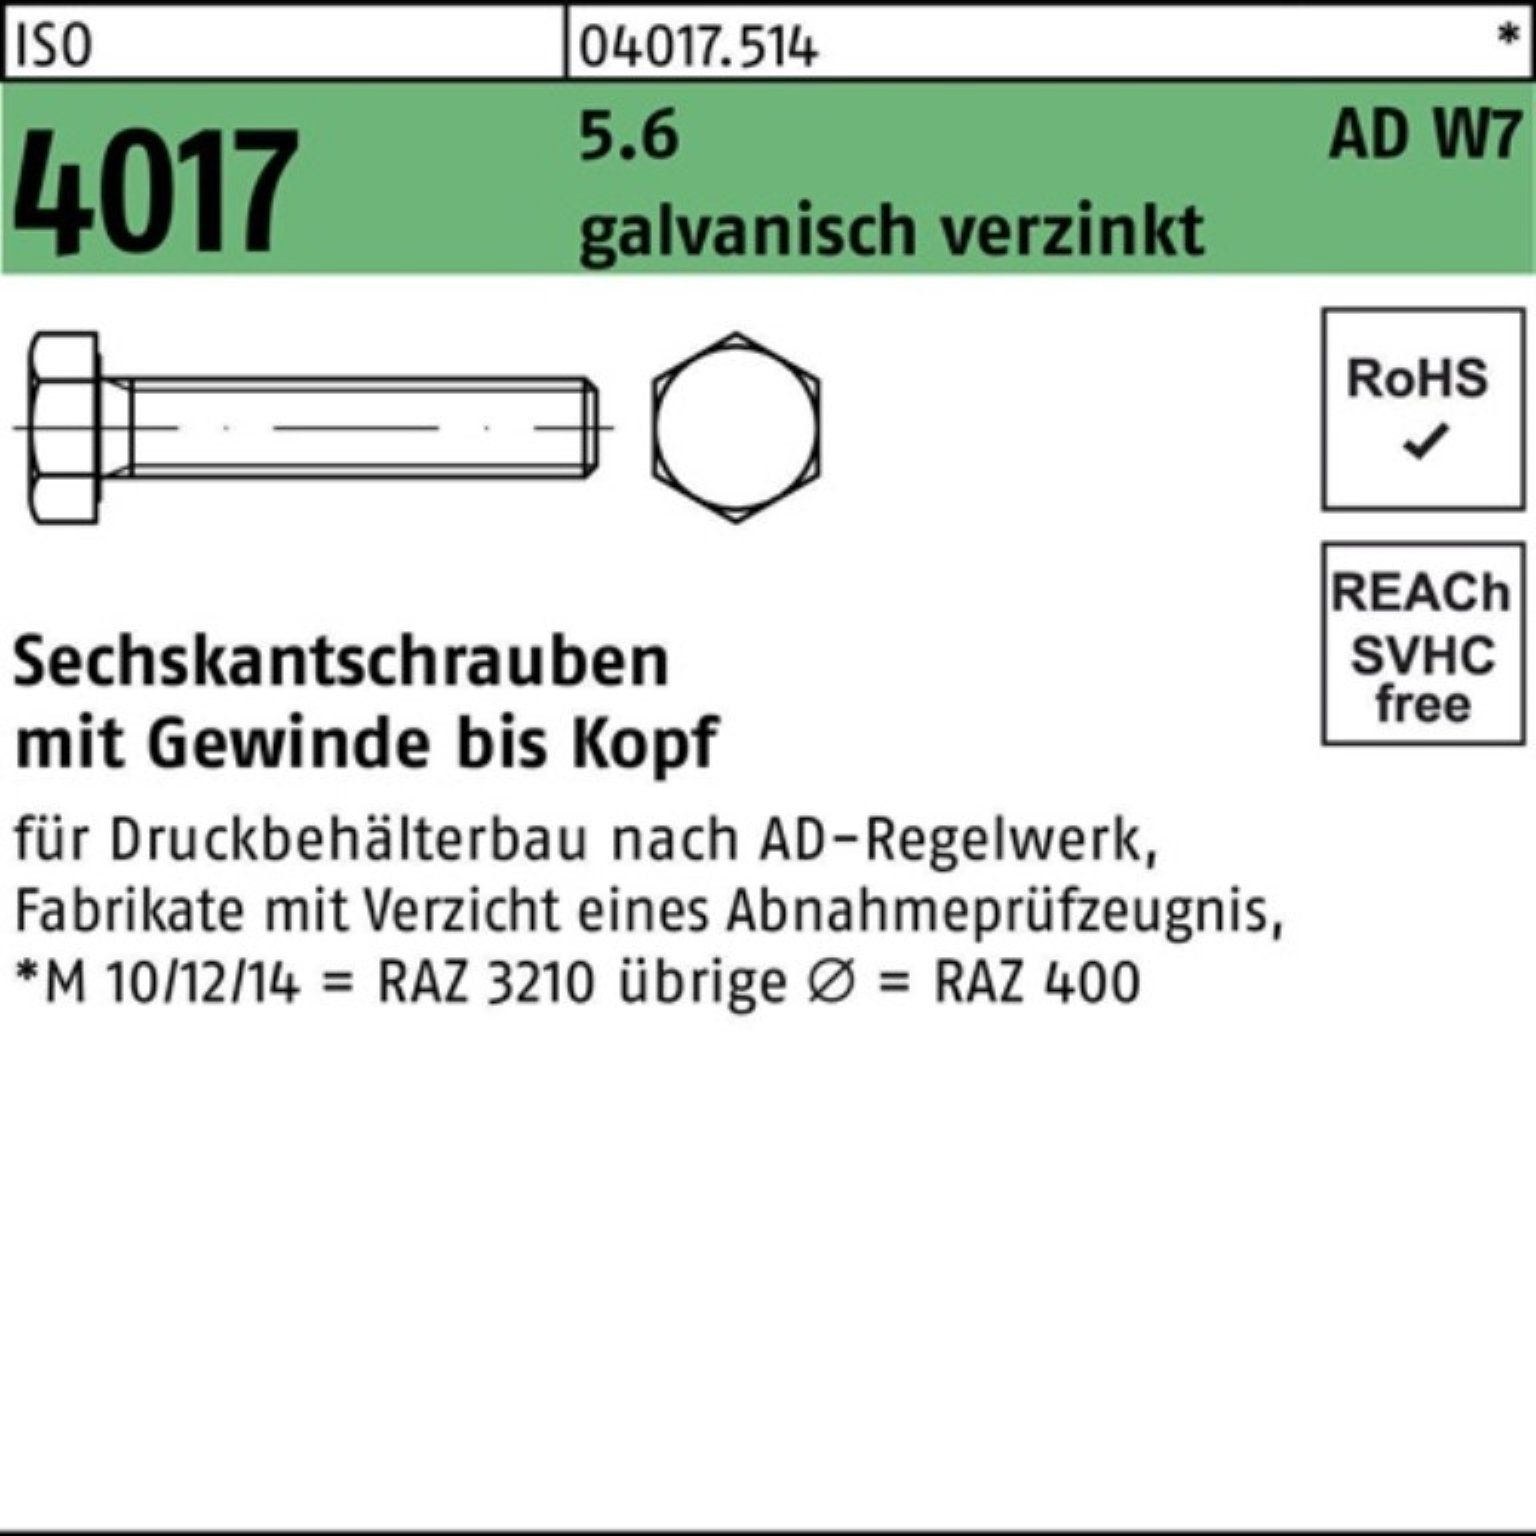 Sechskantschraube 4017 100 5.6 Pack ISO Bufab Sechskantschraube AD galv.verz. VG W7 M12x 100er